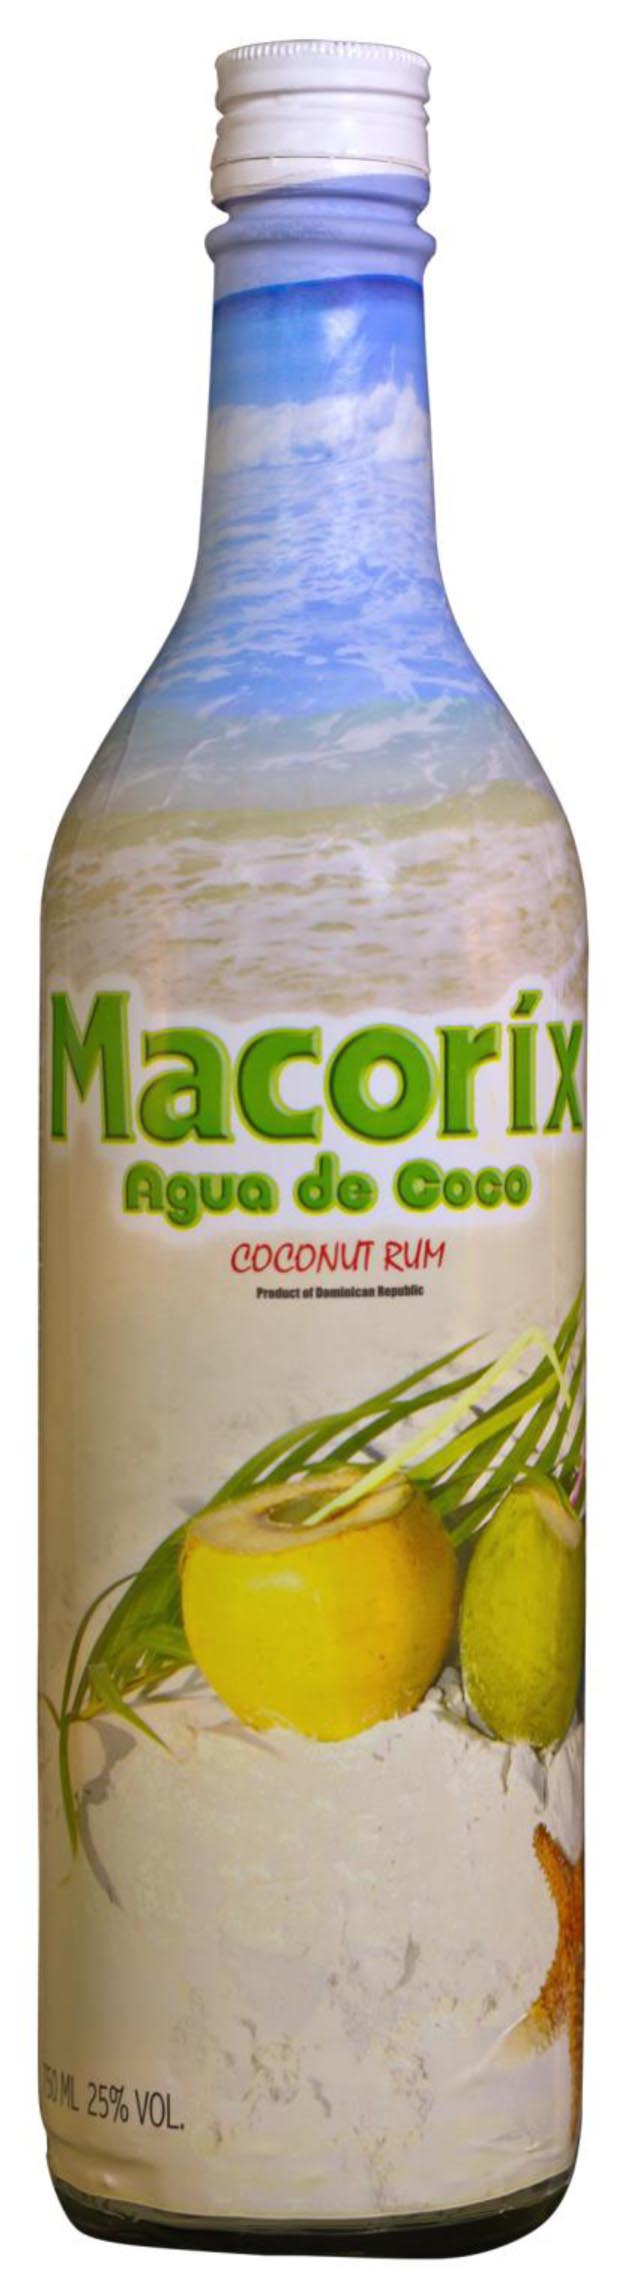 Macorix Agua de Coco | Vinaio Imports